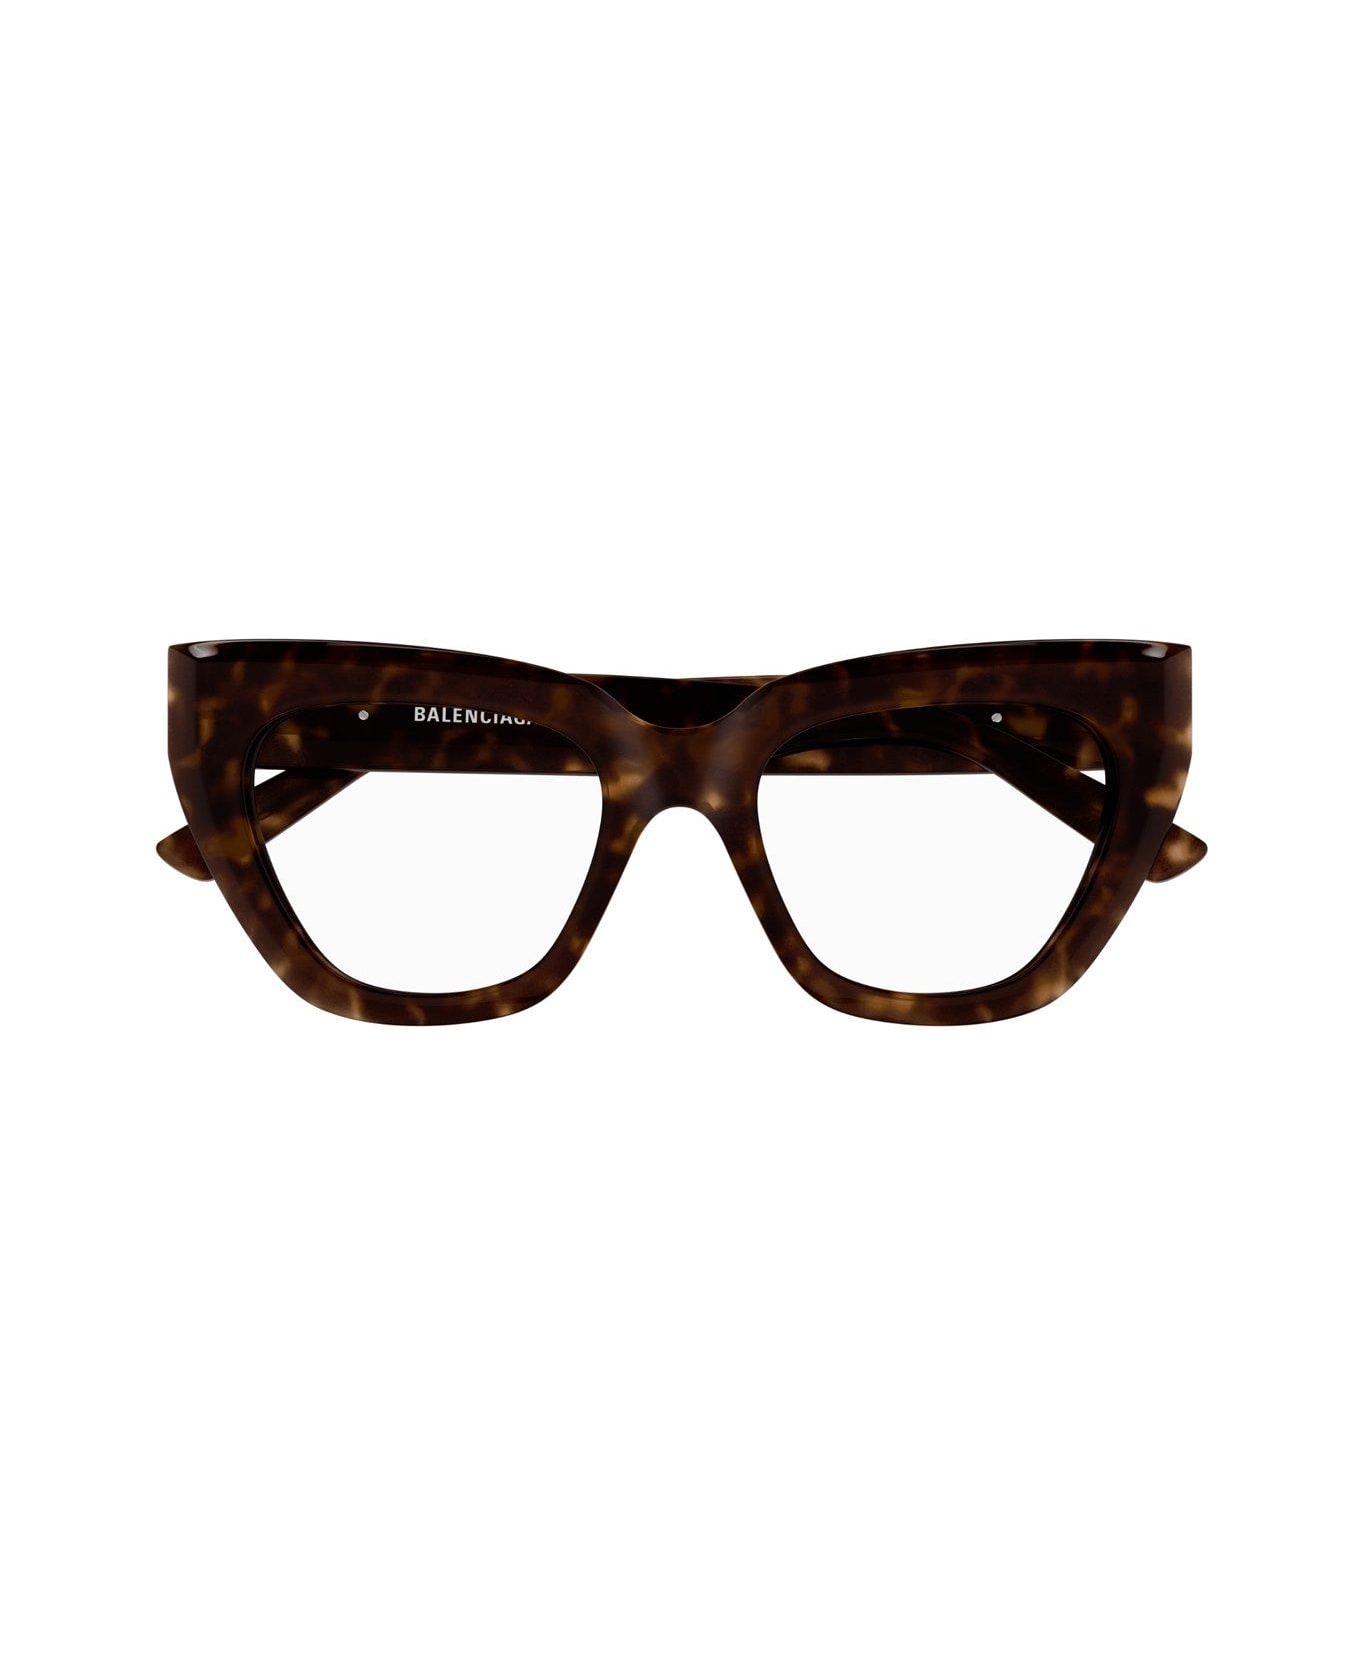 Balenciaga Eyewear Cat-eye Glasses - Marrone アイウェア